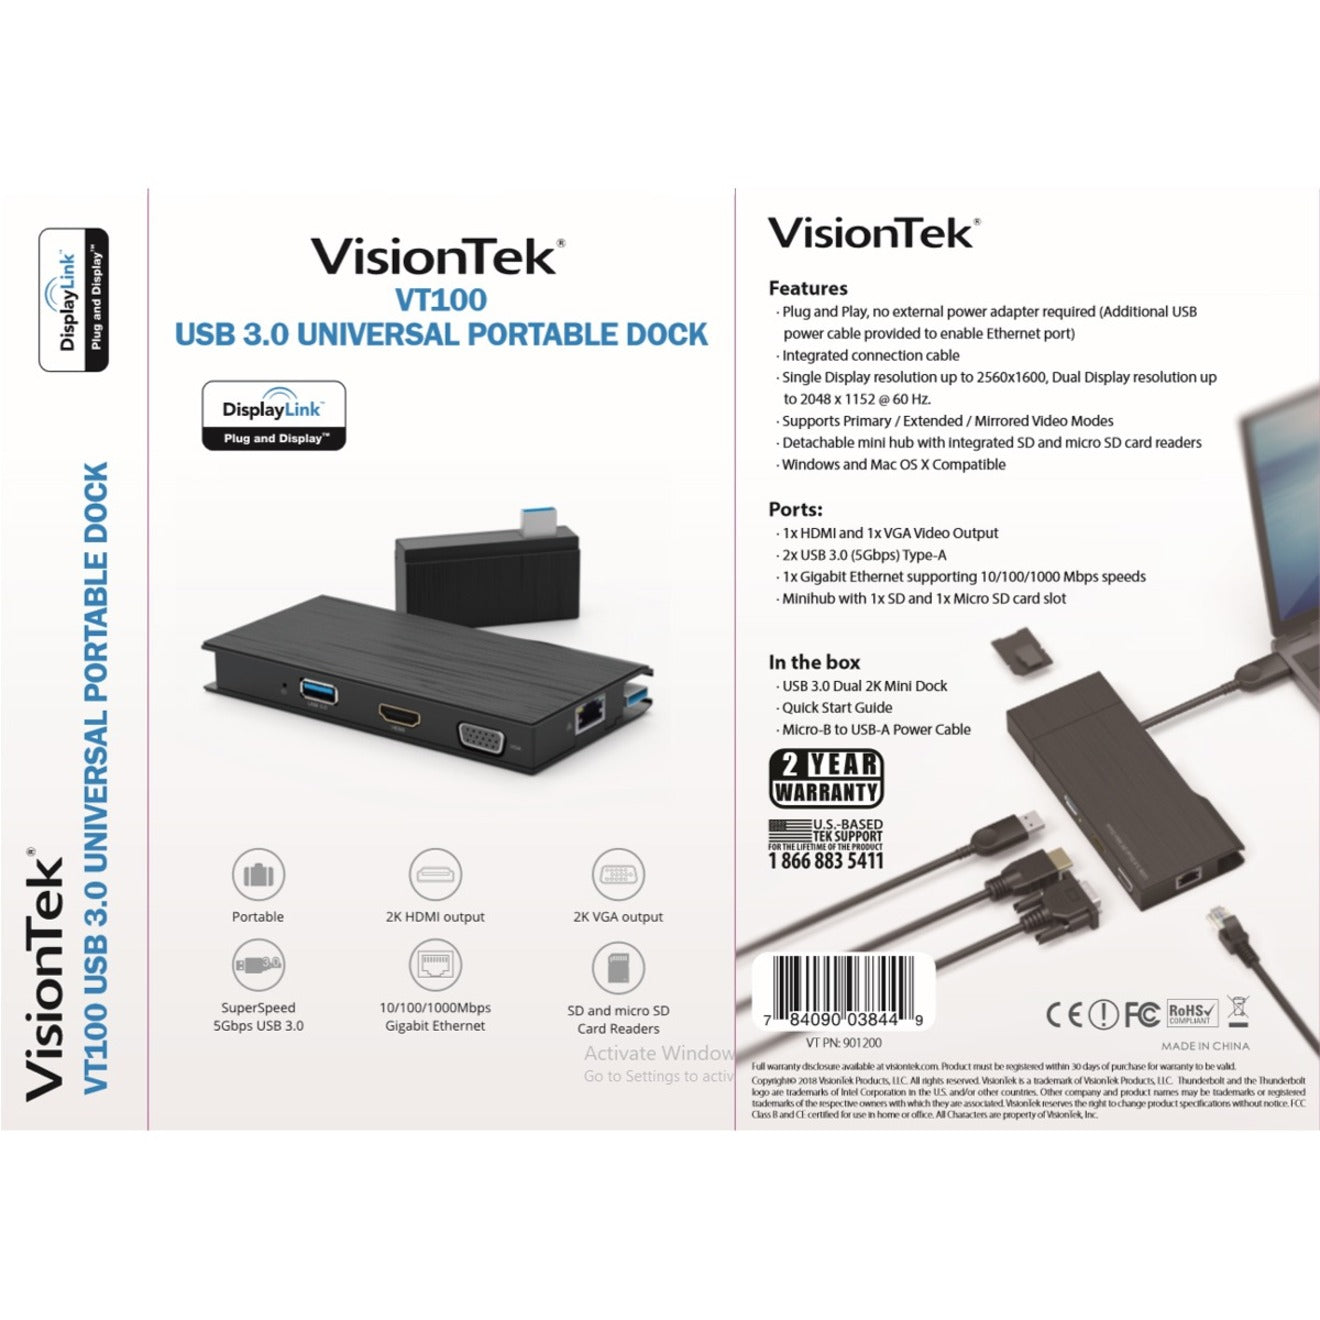 VisionTek 901200 VT100 Dual Display Universal USB 3.0 Docking Station, 2 Year Warranty, Windows, macOS, ChromeOS Compatible